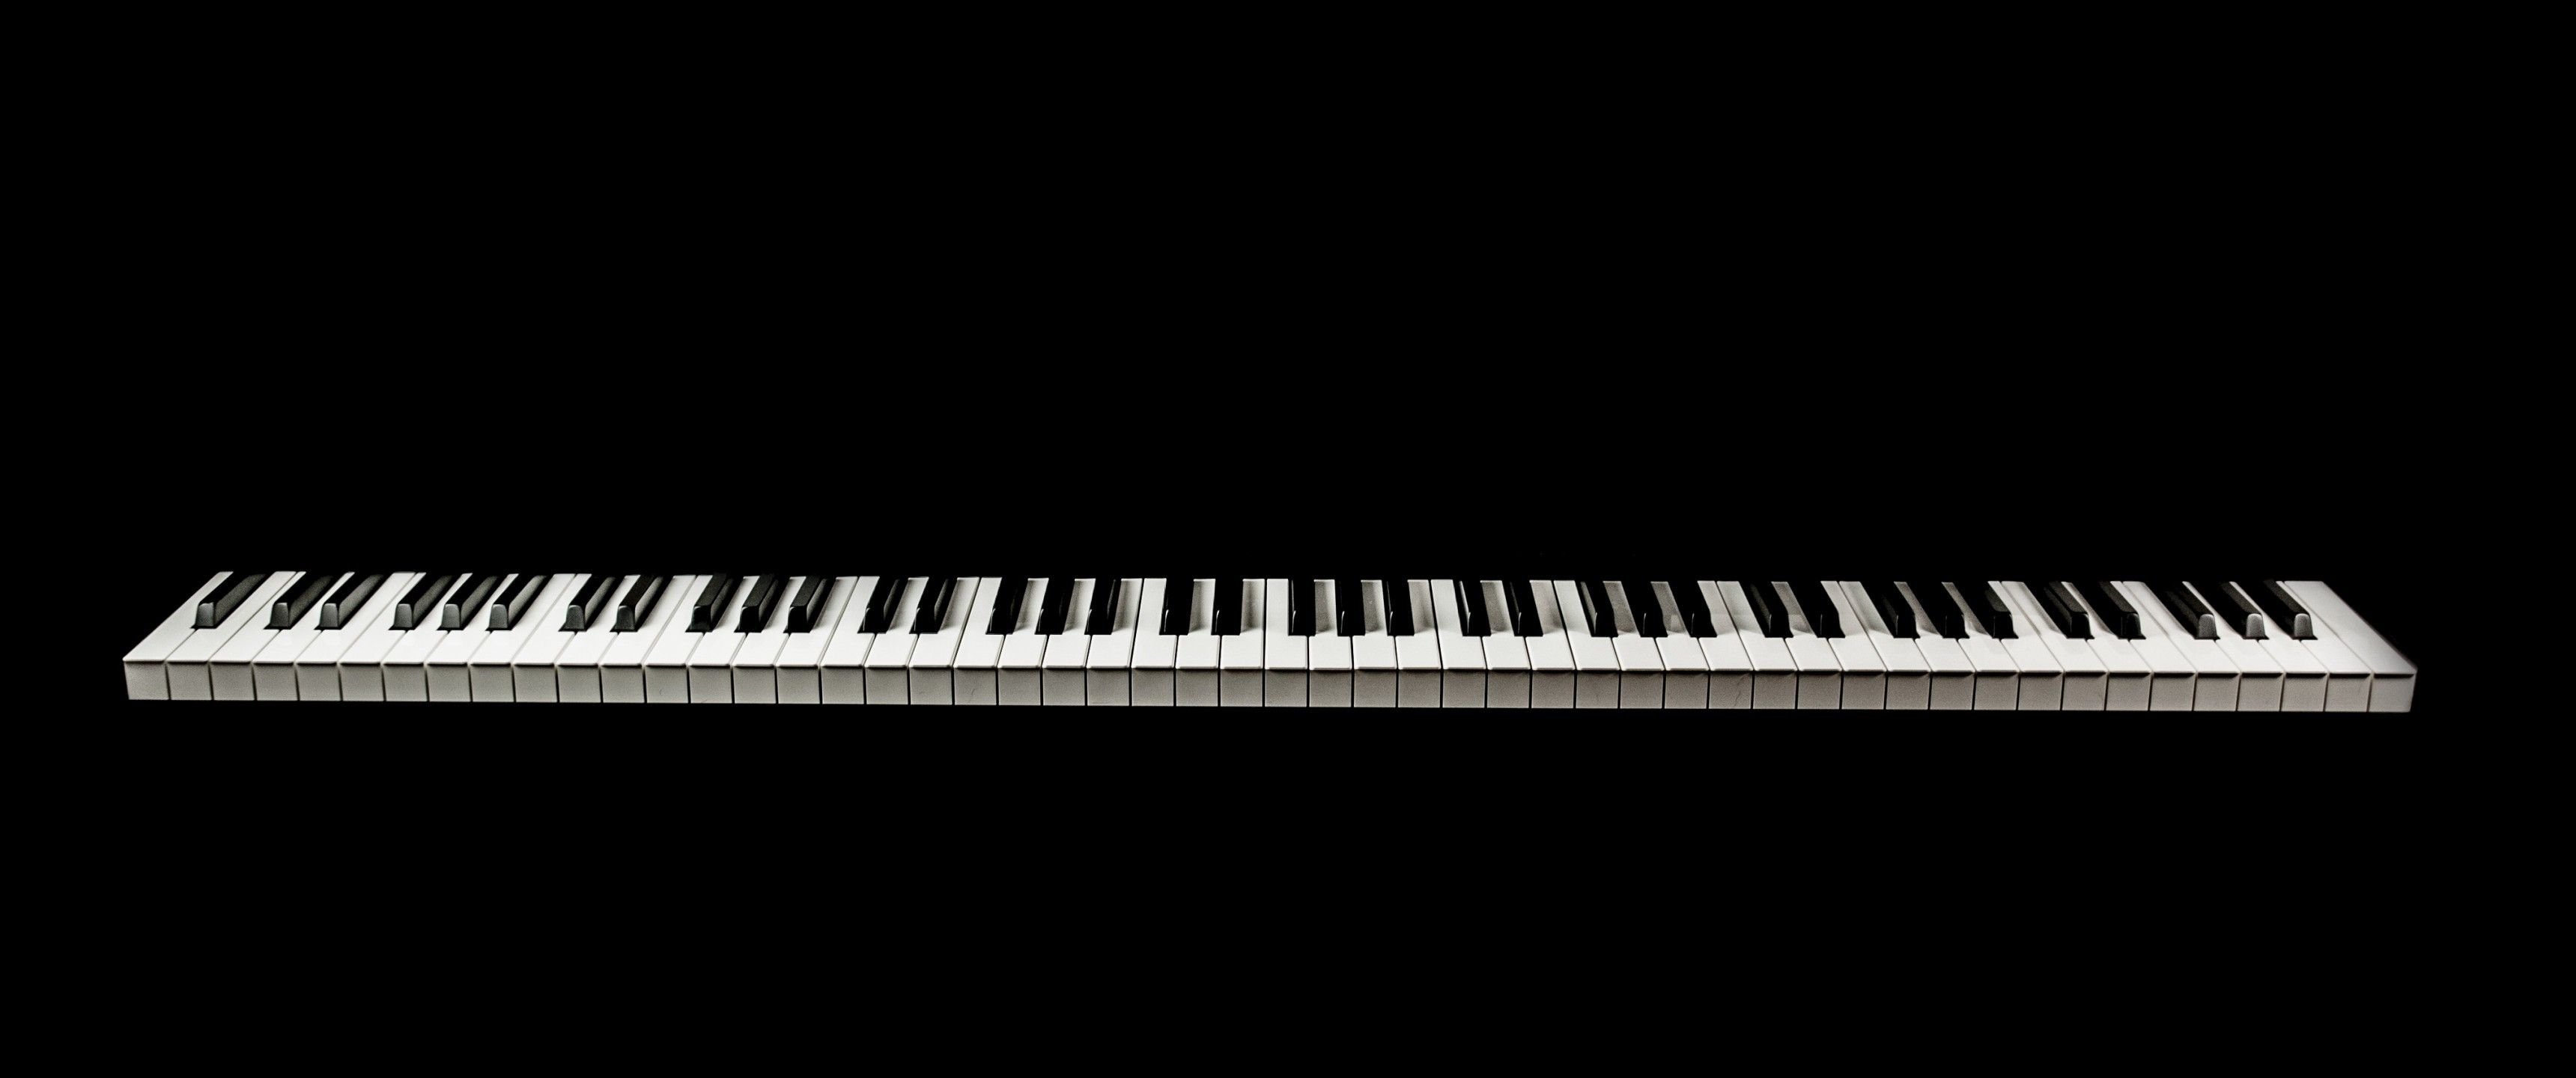 Download 3440x1440 Piano Keyboard, Music, Simple Wallpaper